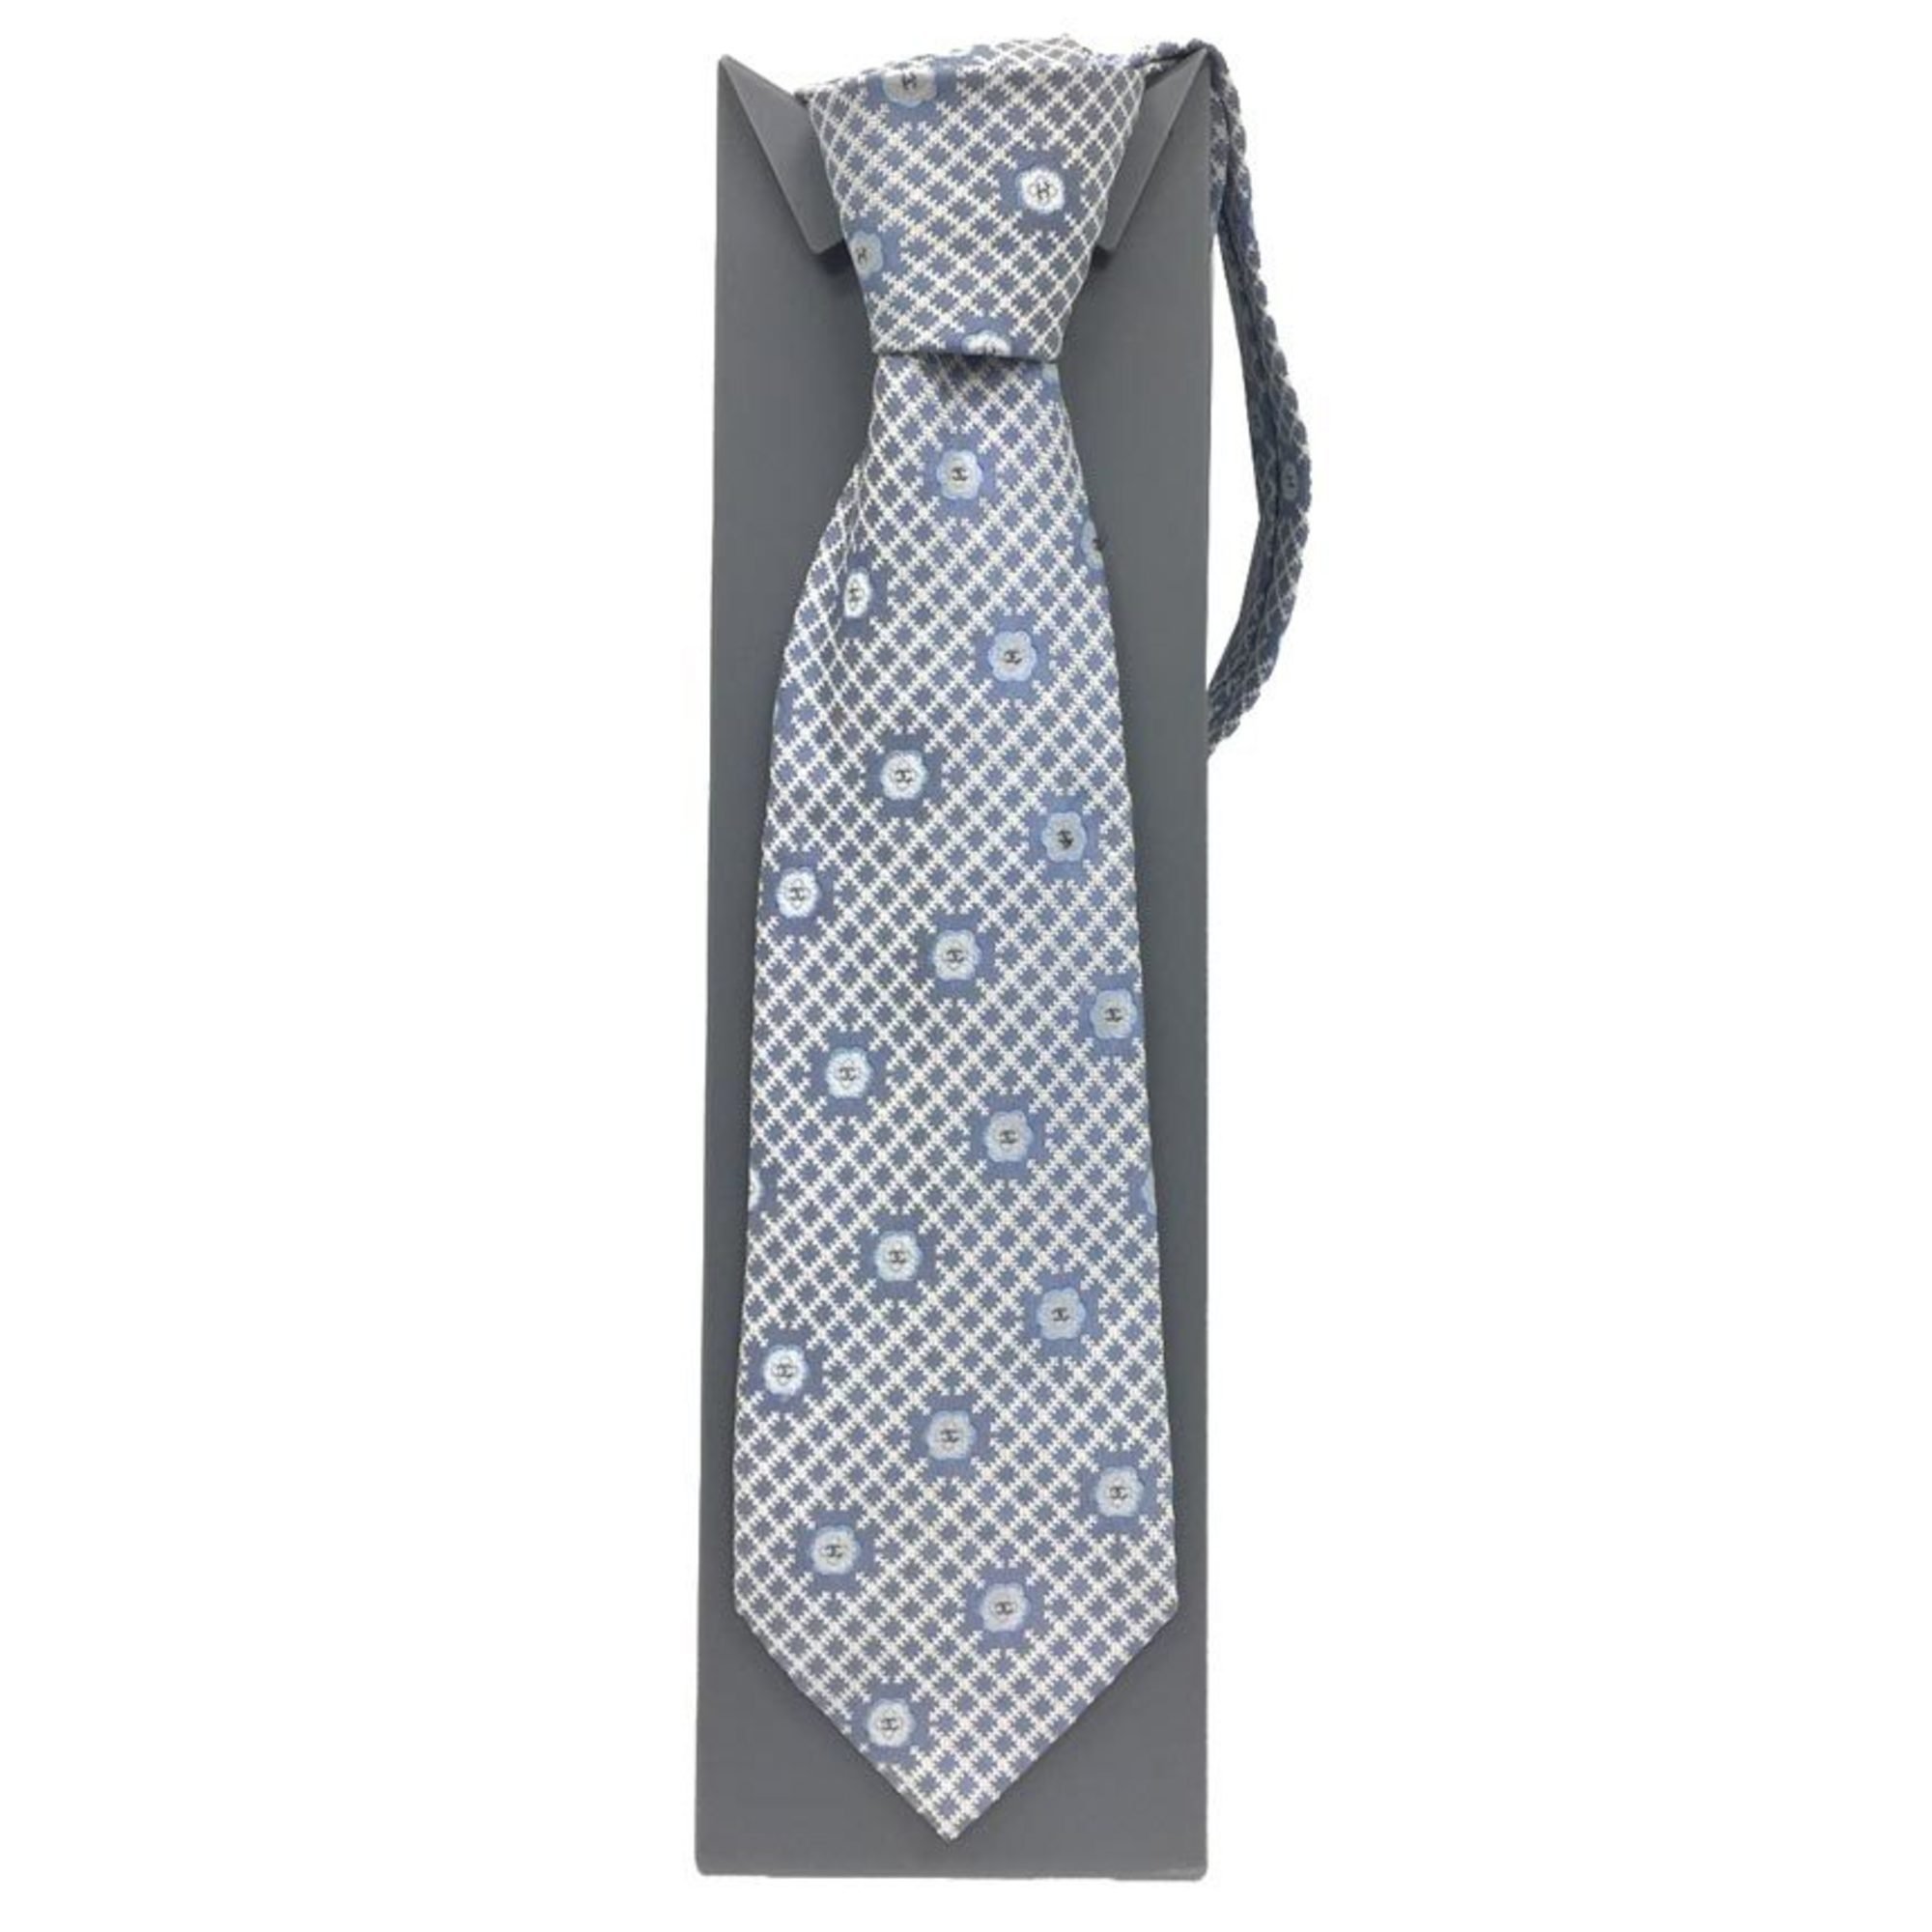 CHANEL Tie Camellia Blue Silver 100% Silk Men's